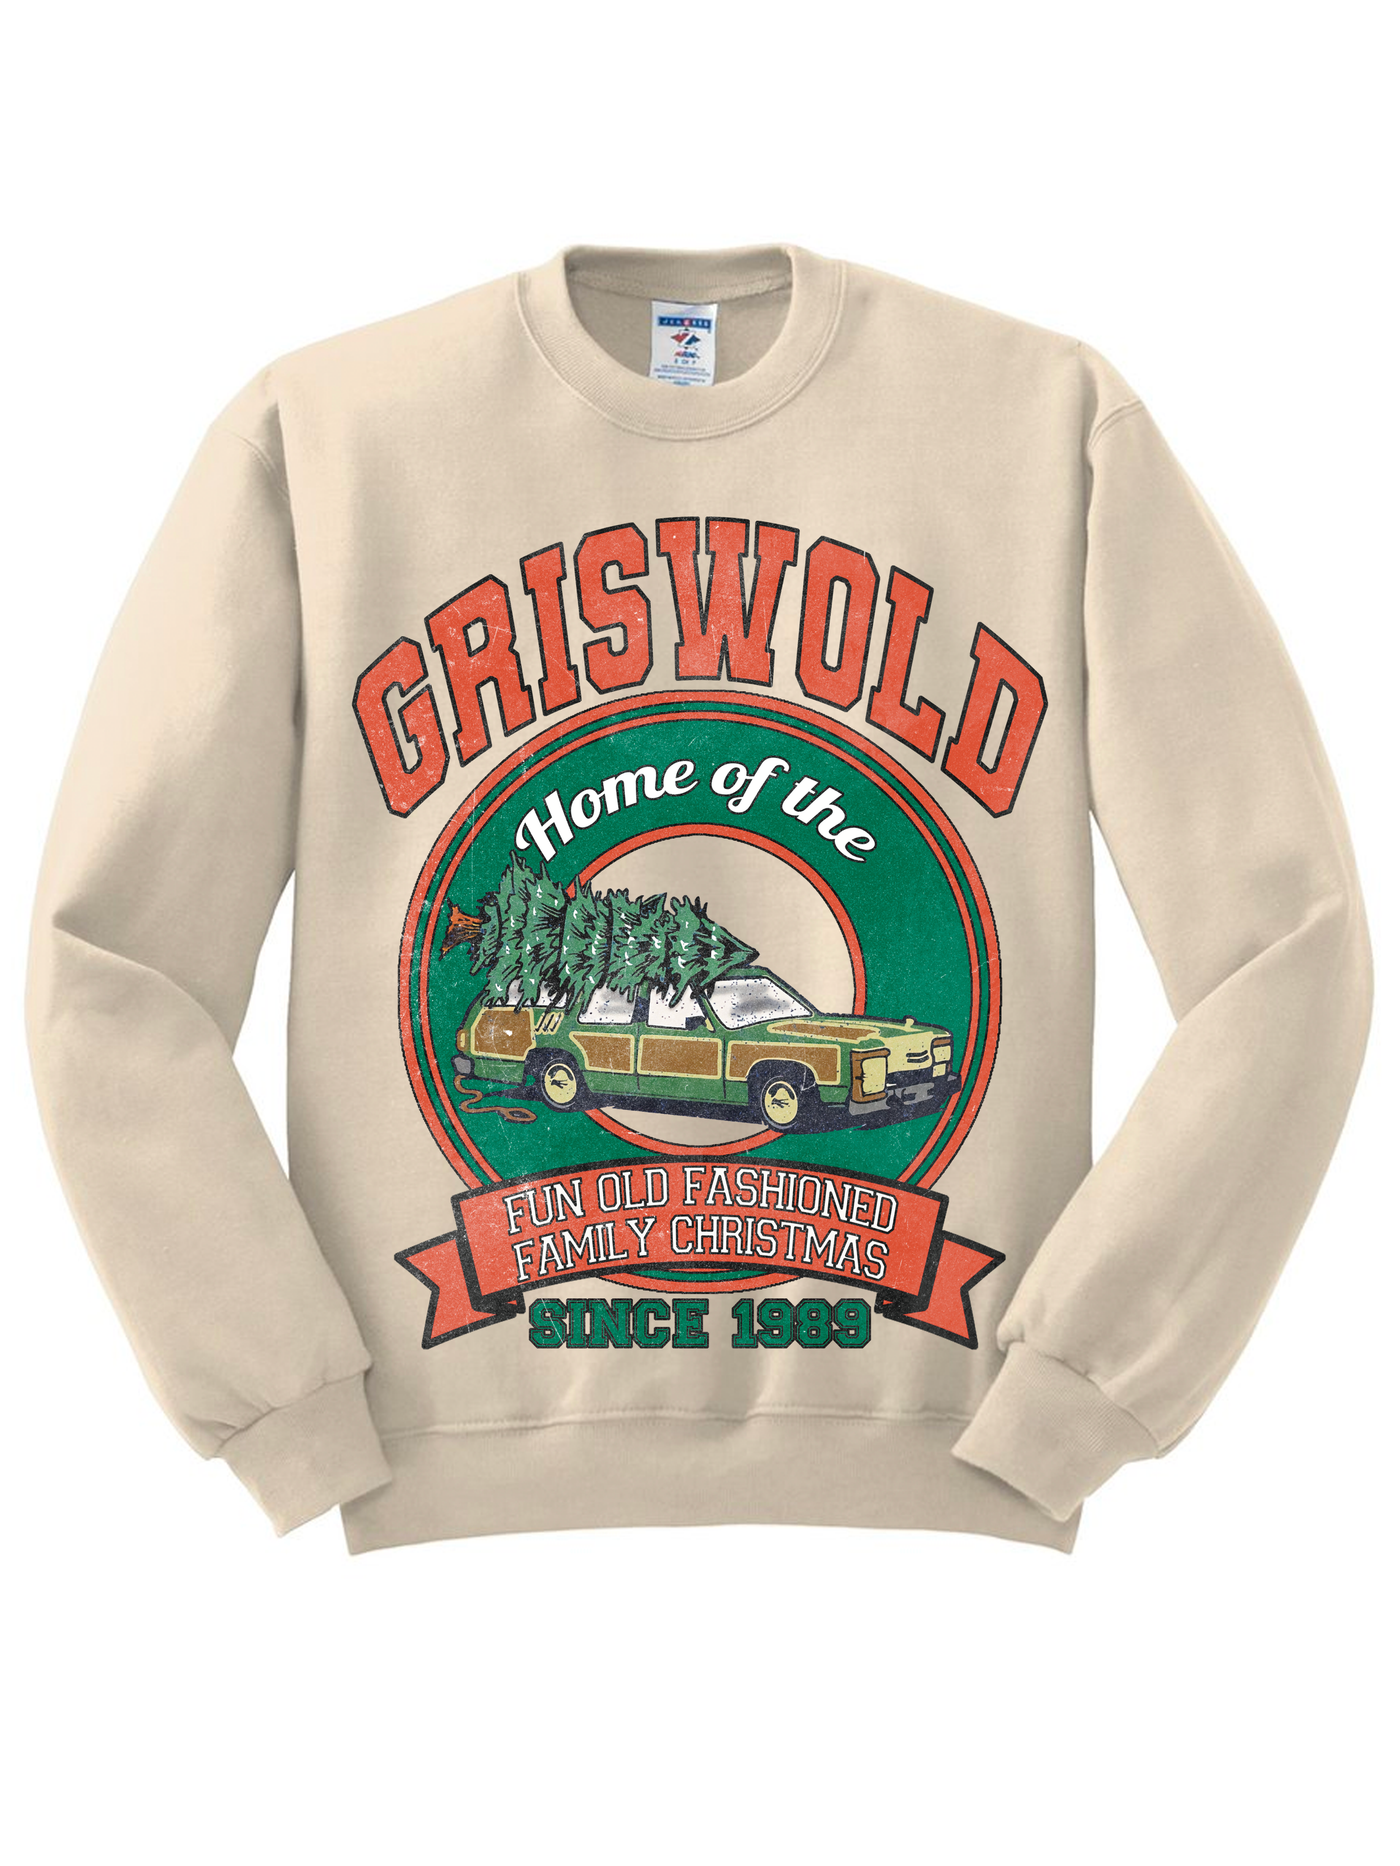 The Griswold Tee/Sweatshirt